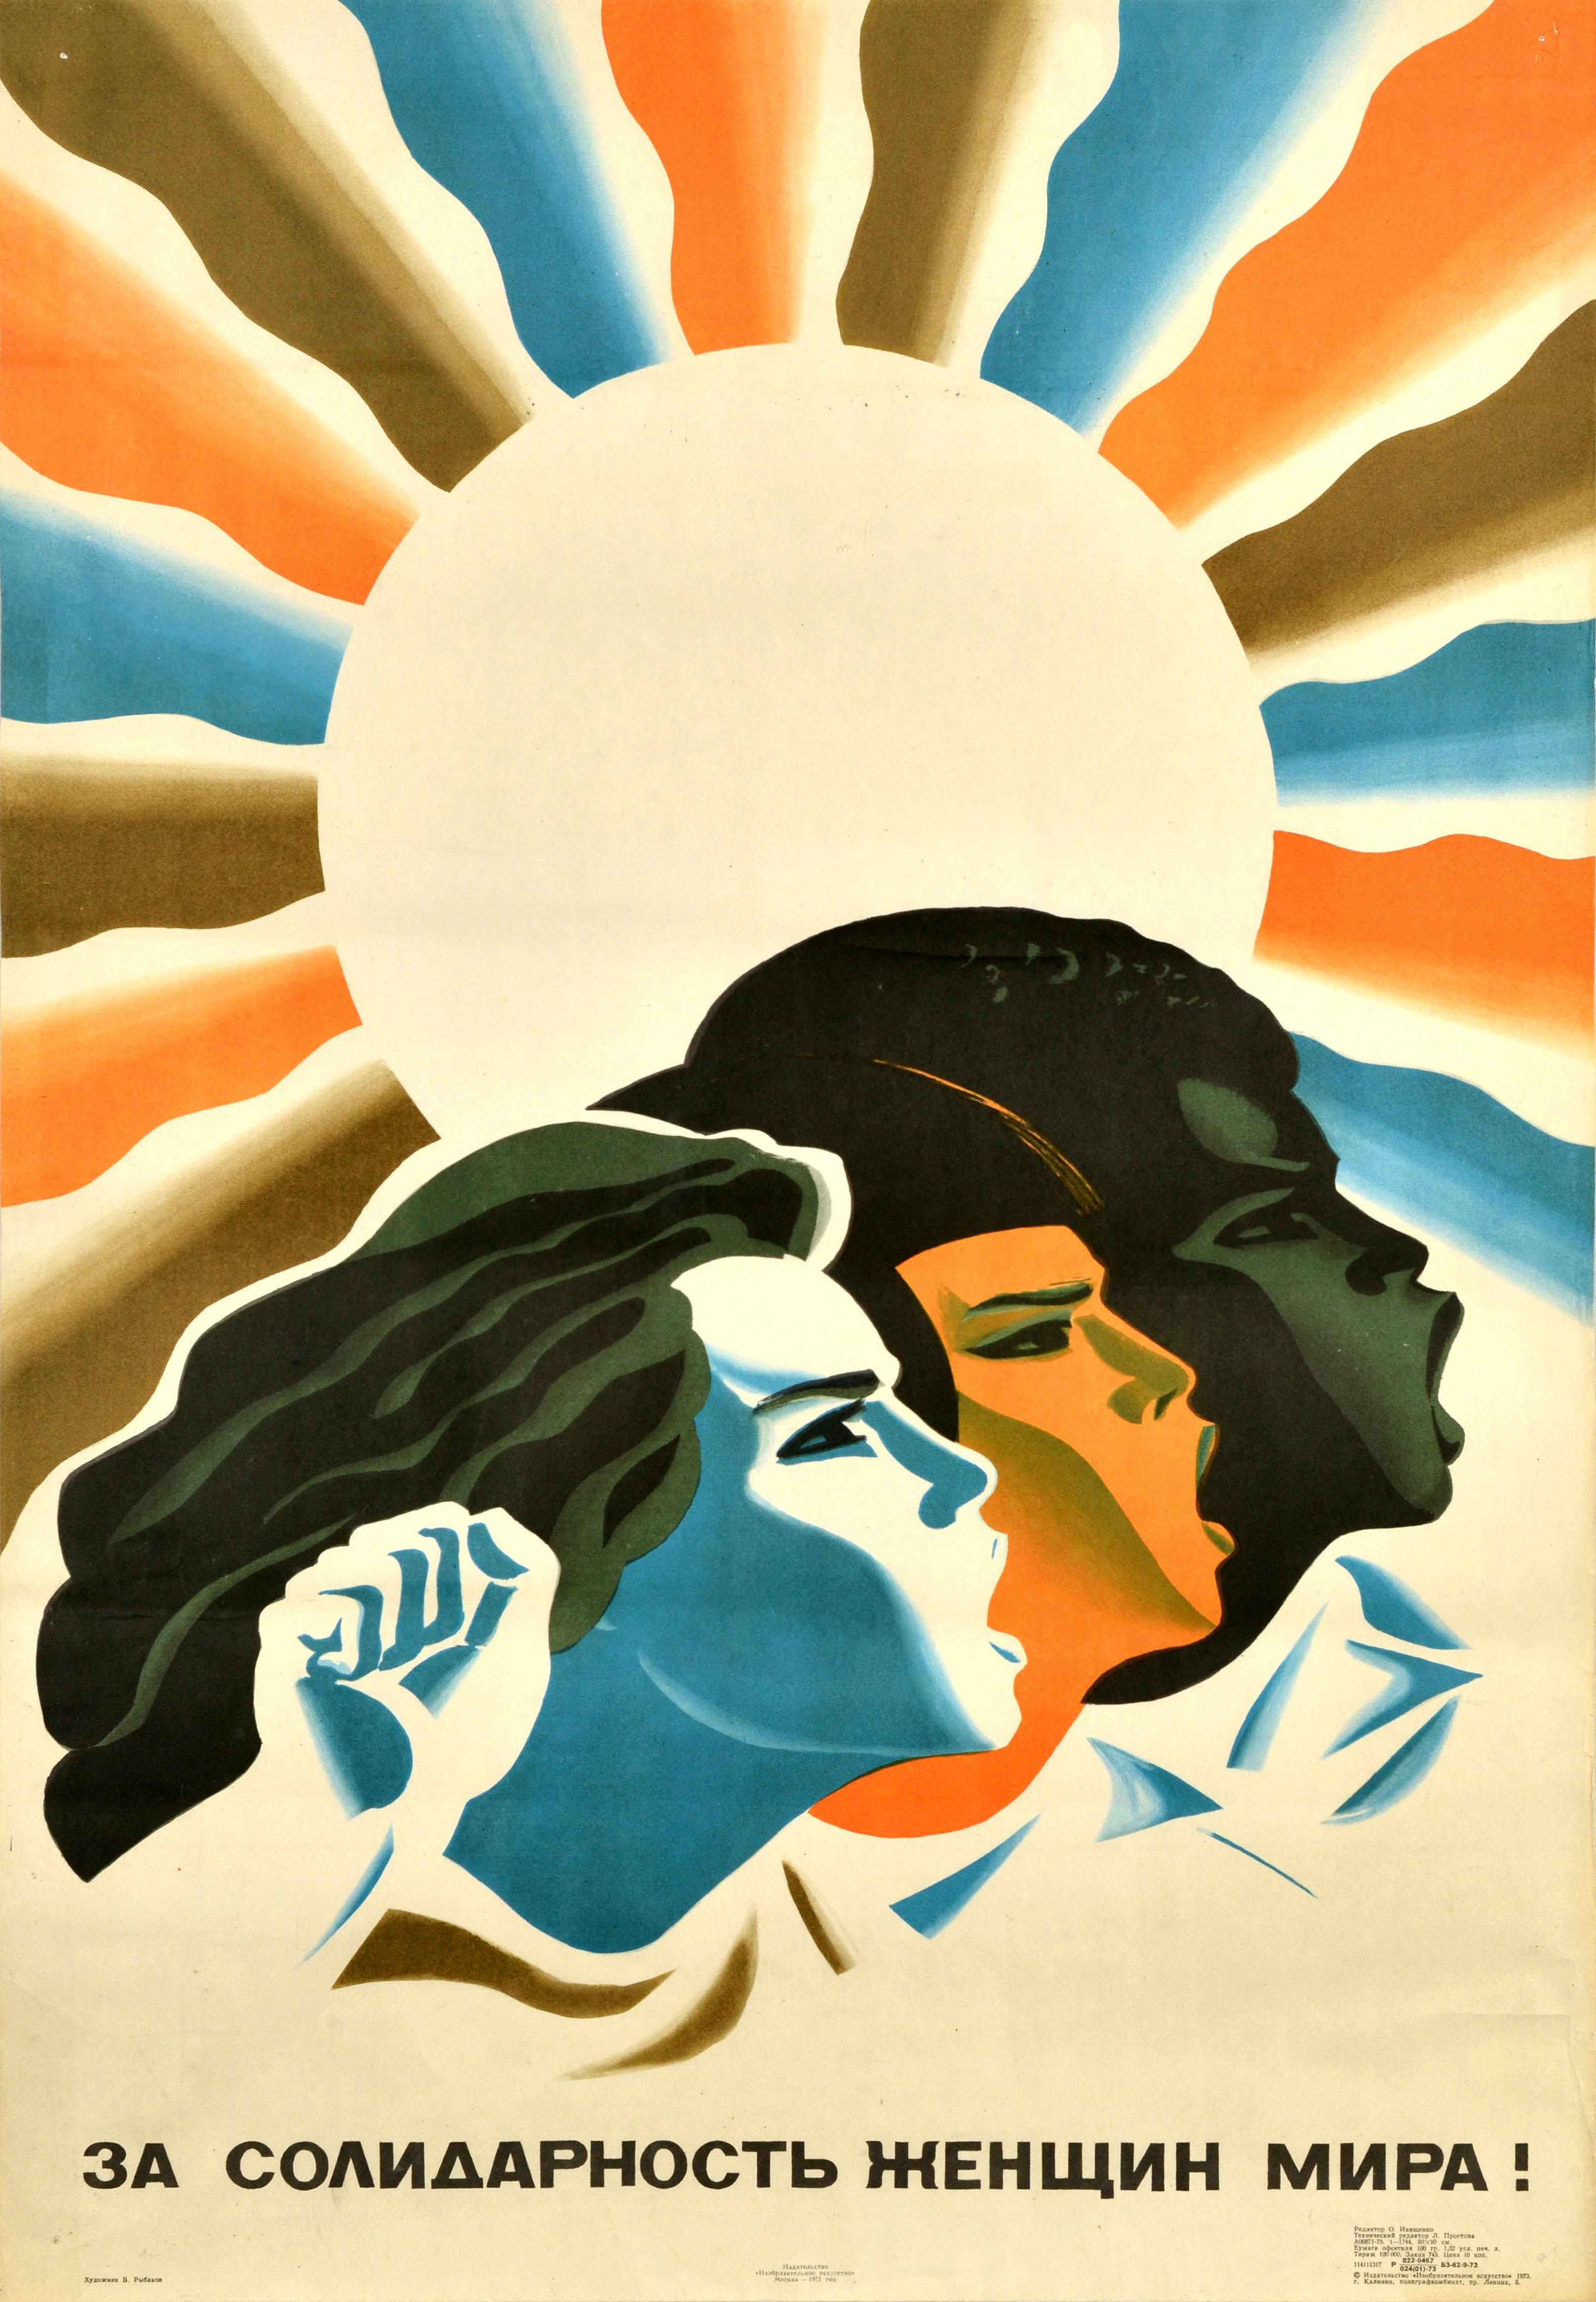 Unknown Print - Original Vintage Soviet Union Propaganda Poster Women Solidarity Feminism USSR